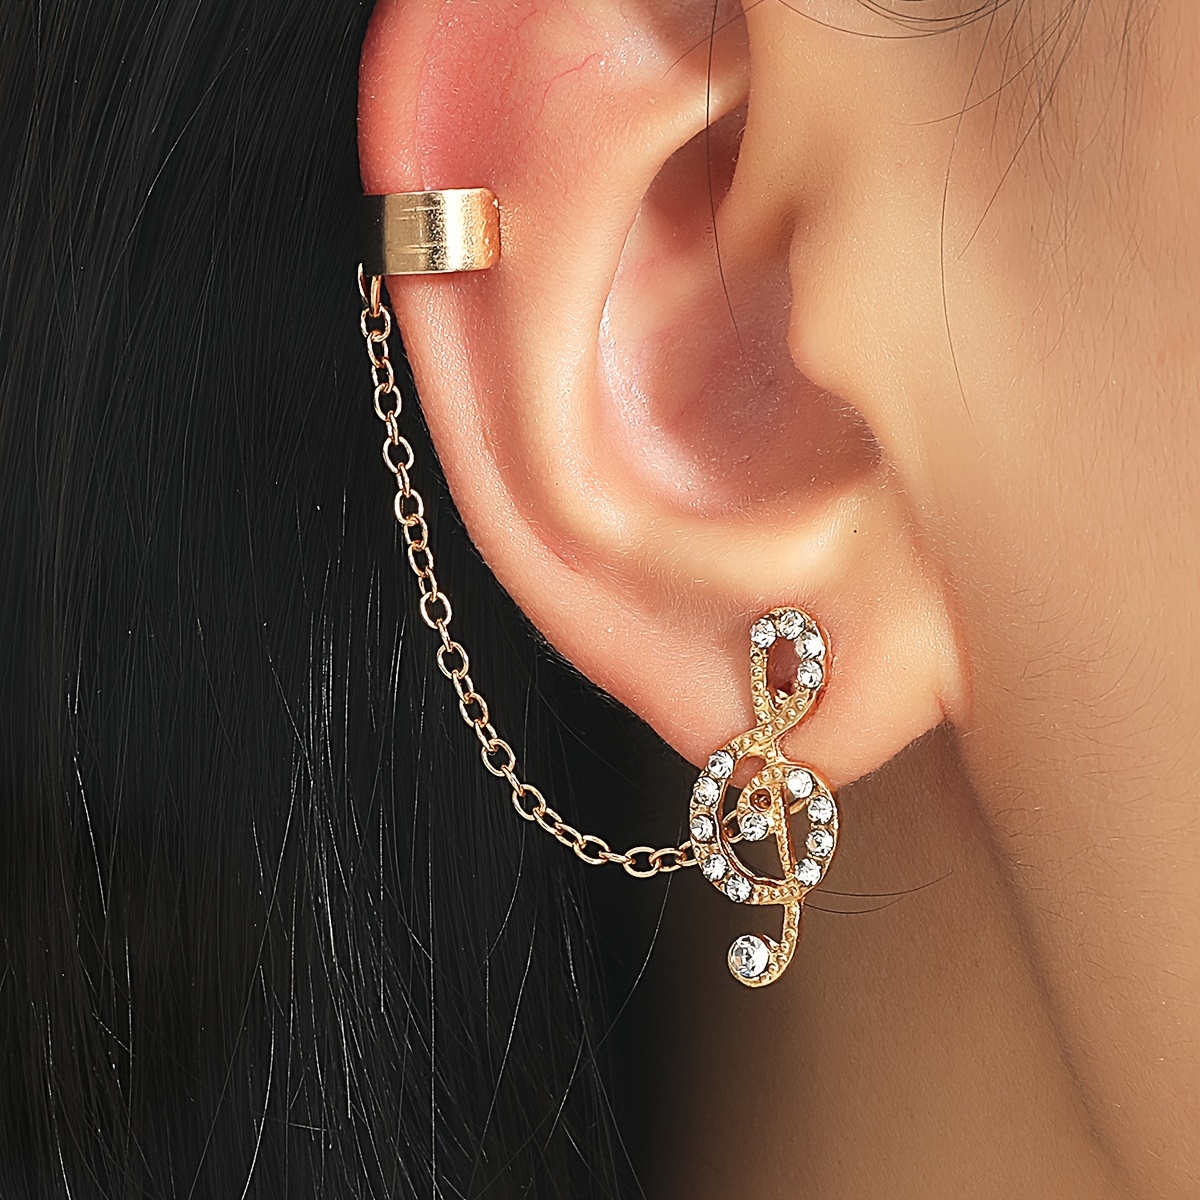 Handmade Feather helix to lobe hoop chain earring ear cartilage chain  jewelry  eBay